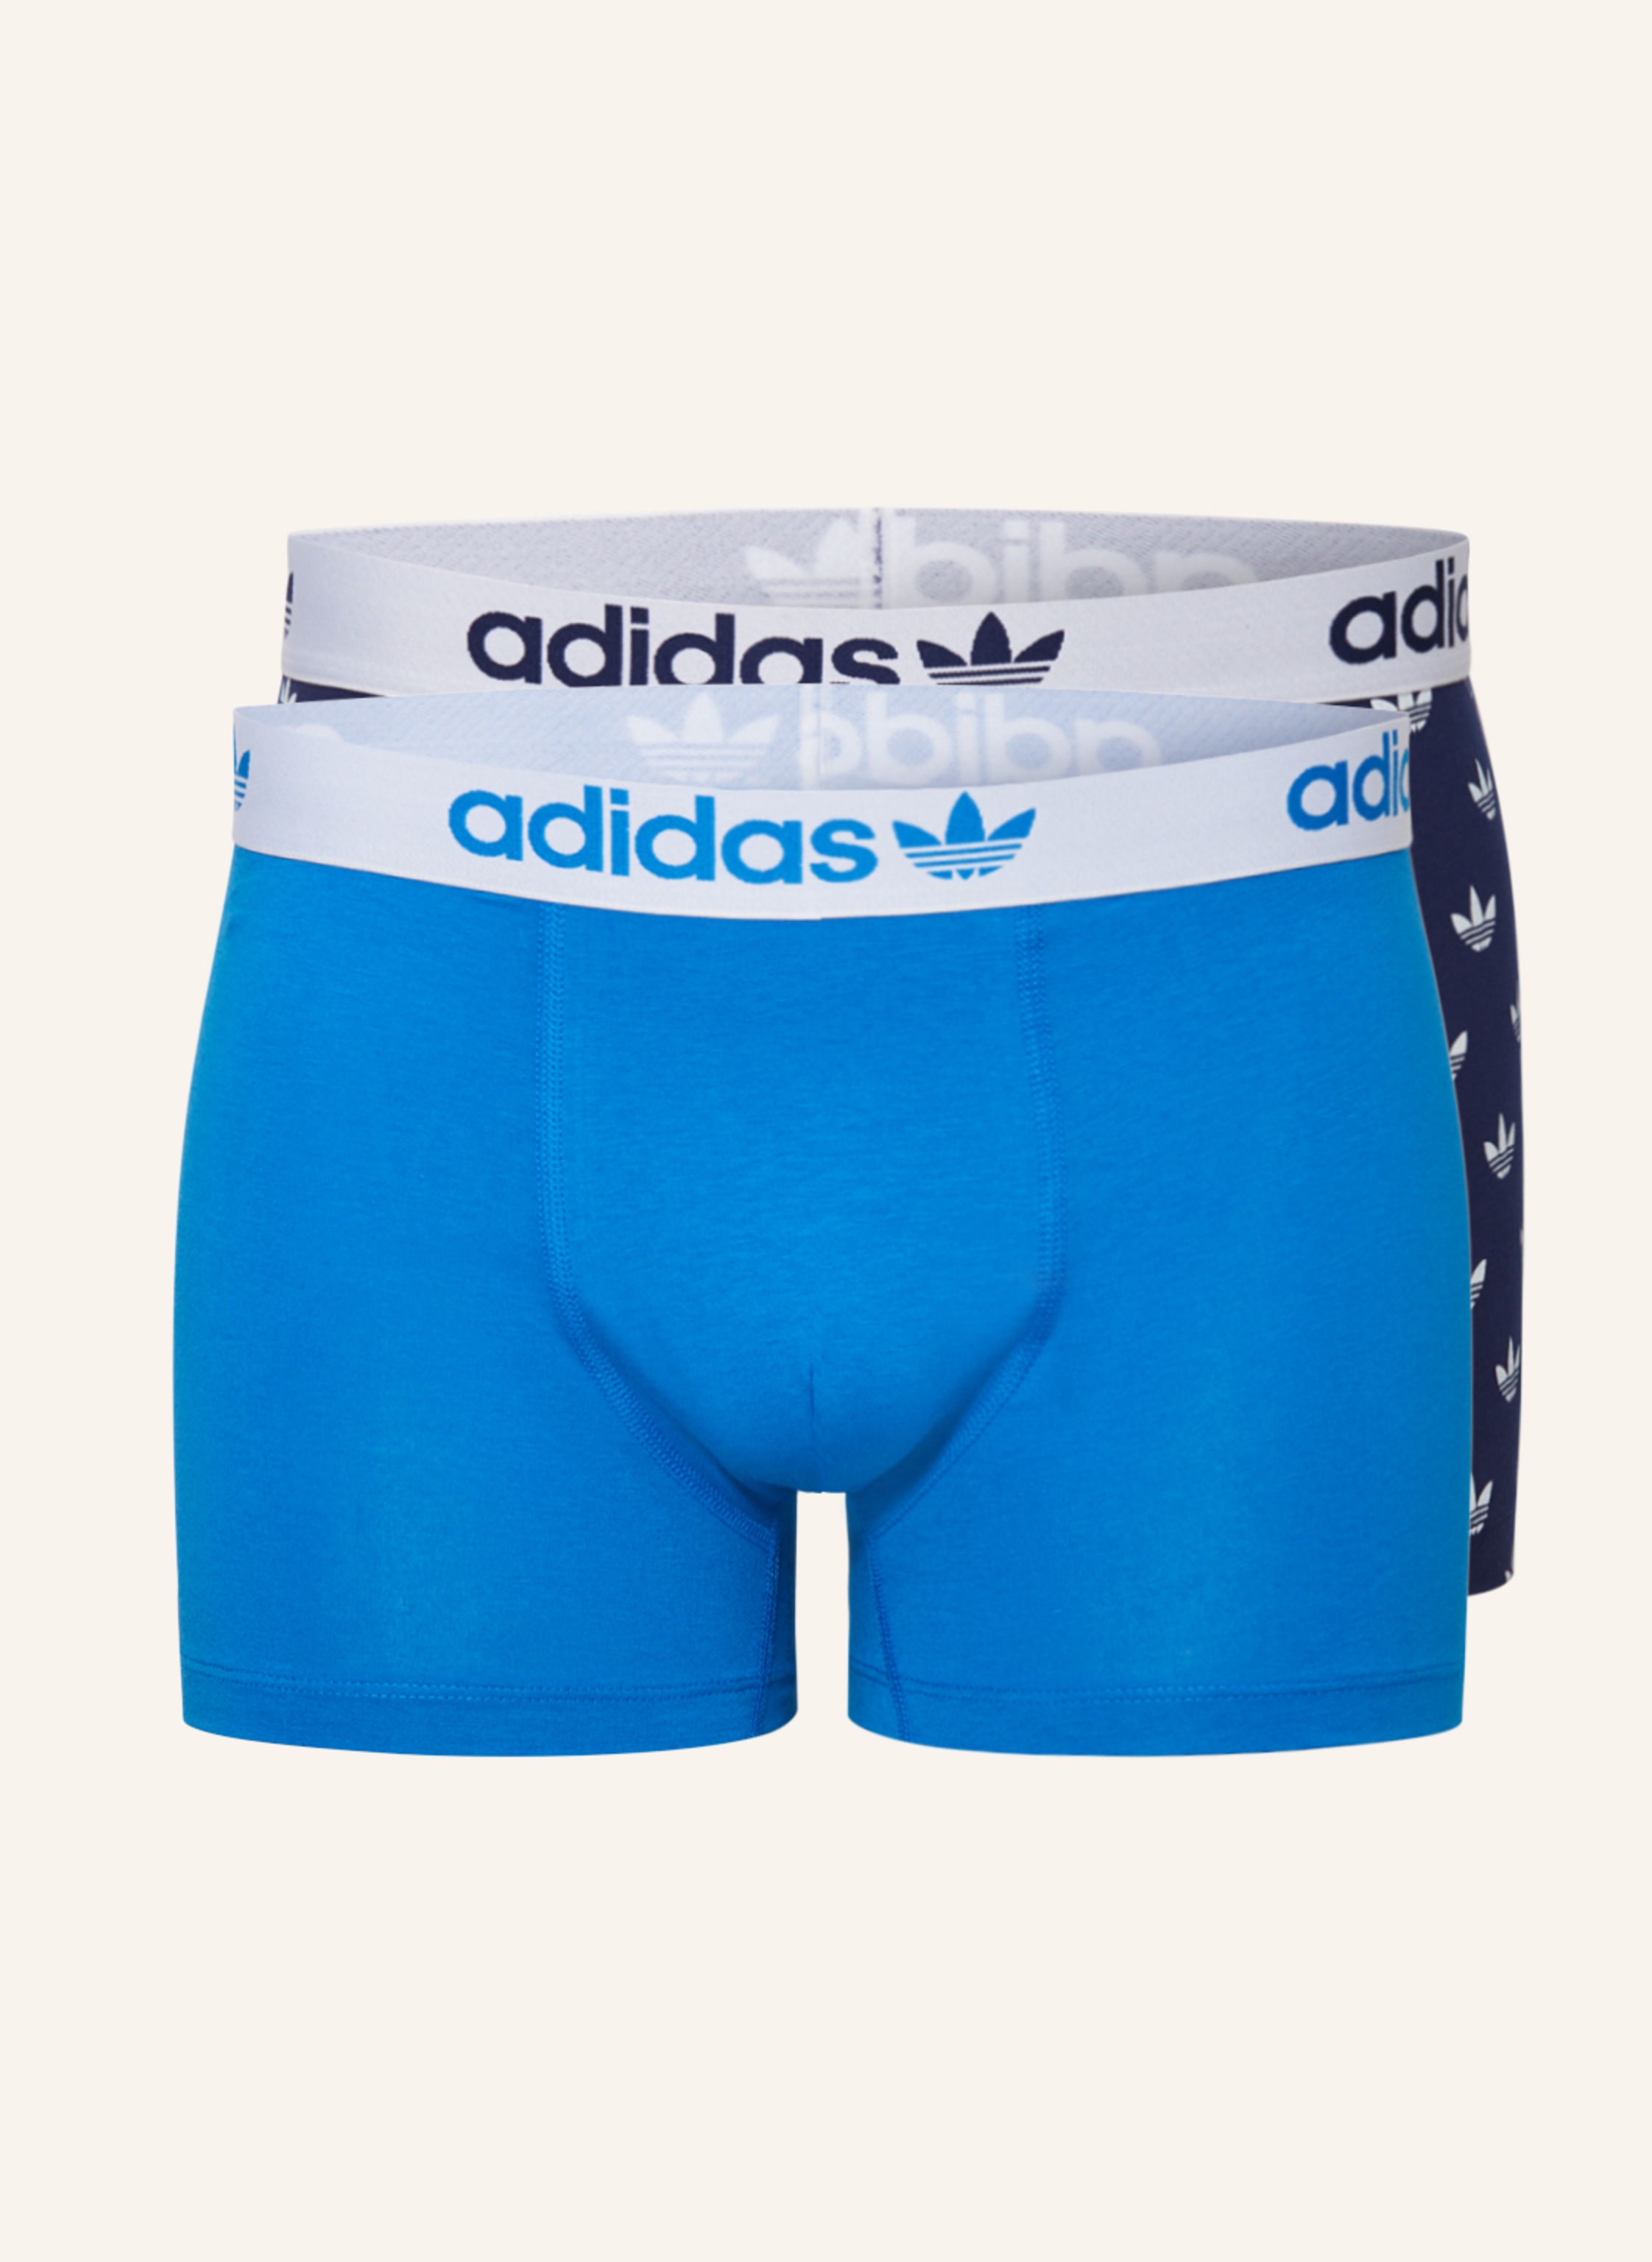 adidas blau/ 2er-Pack weiss in Boxershorts Originals dunkelblau/